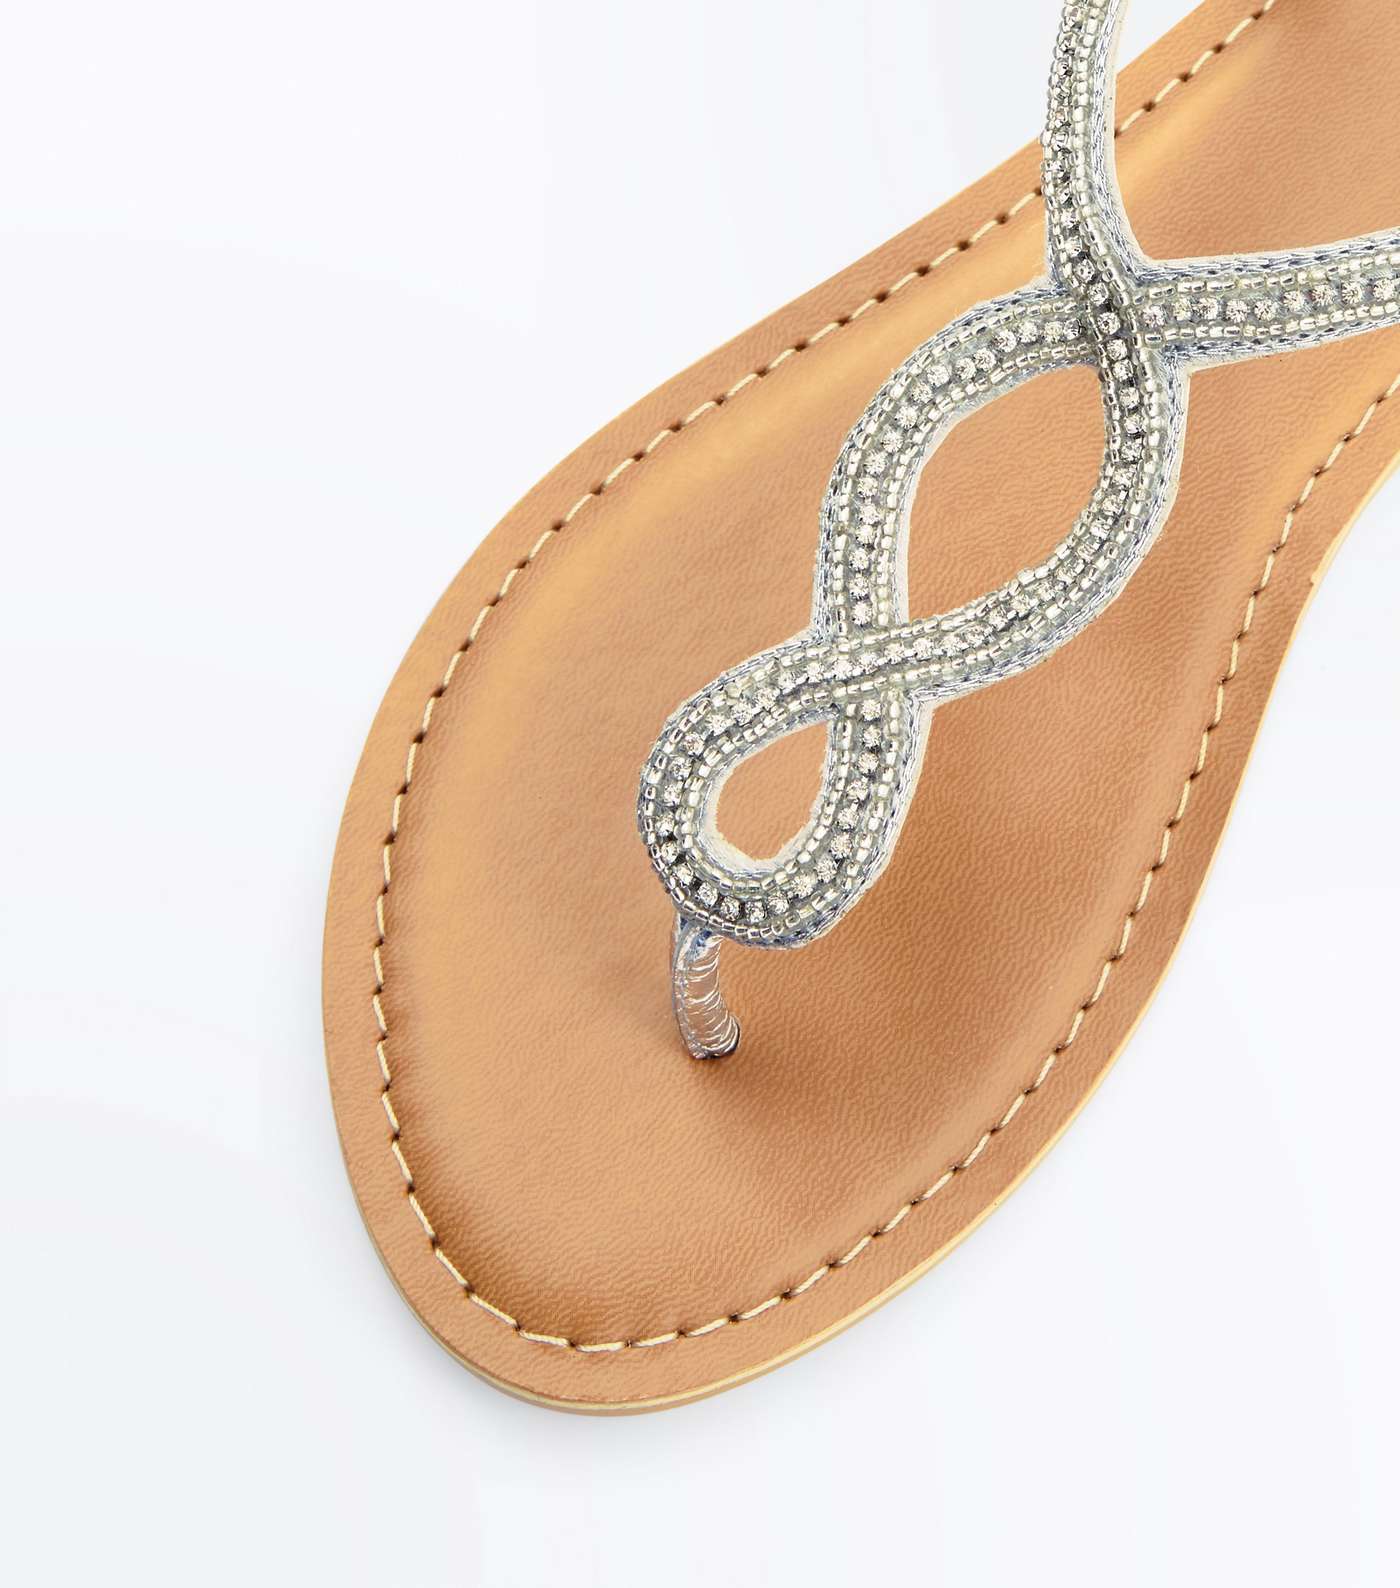 Silver Leather Bead Embellished Sandals Image 5